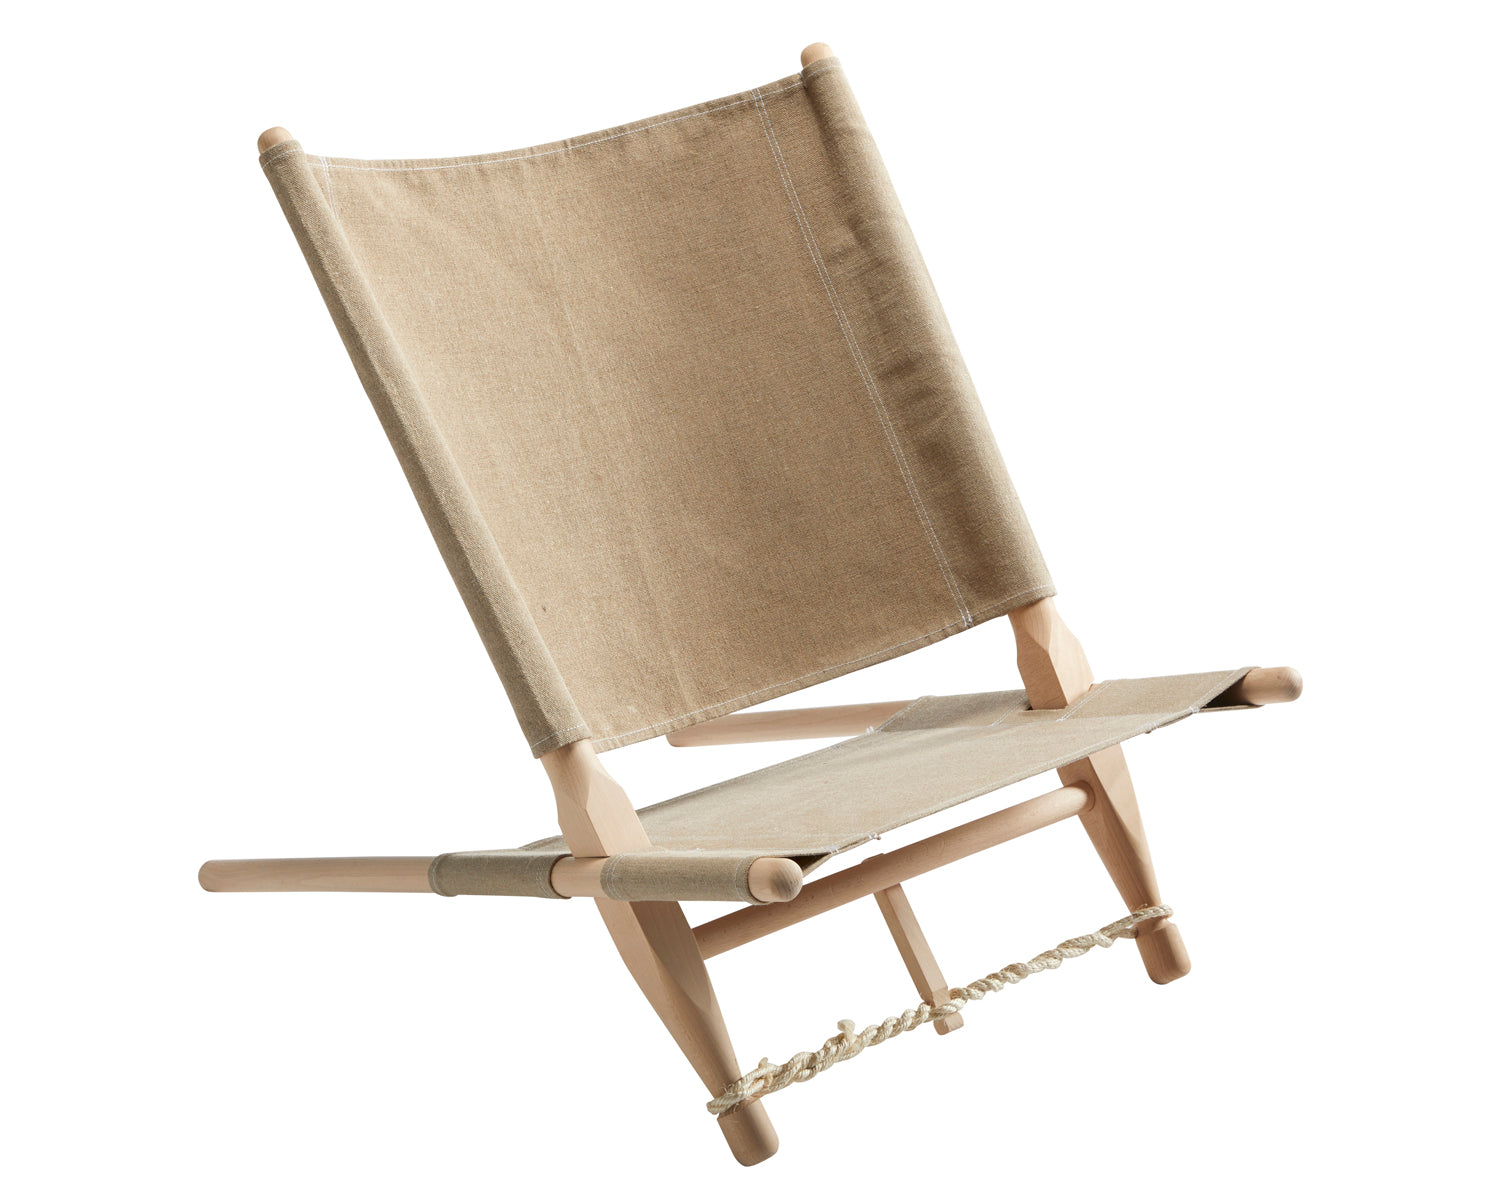 Moesgaard wooden chair - Neutral